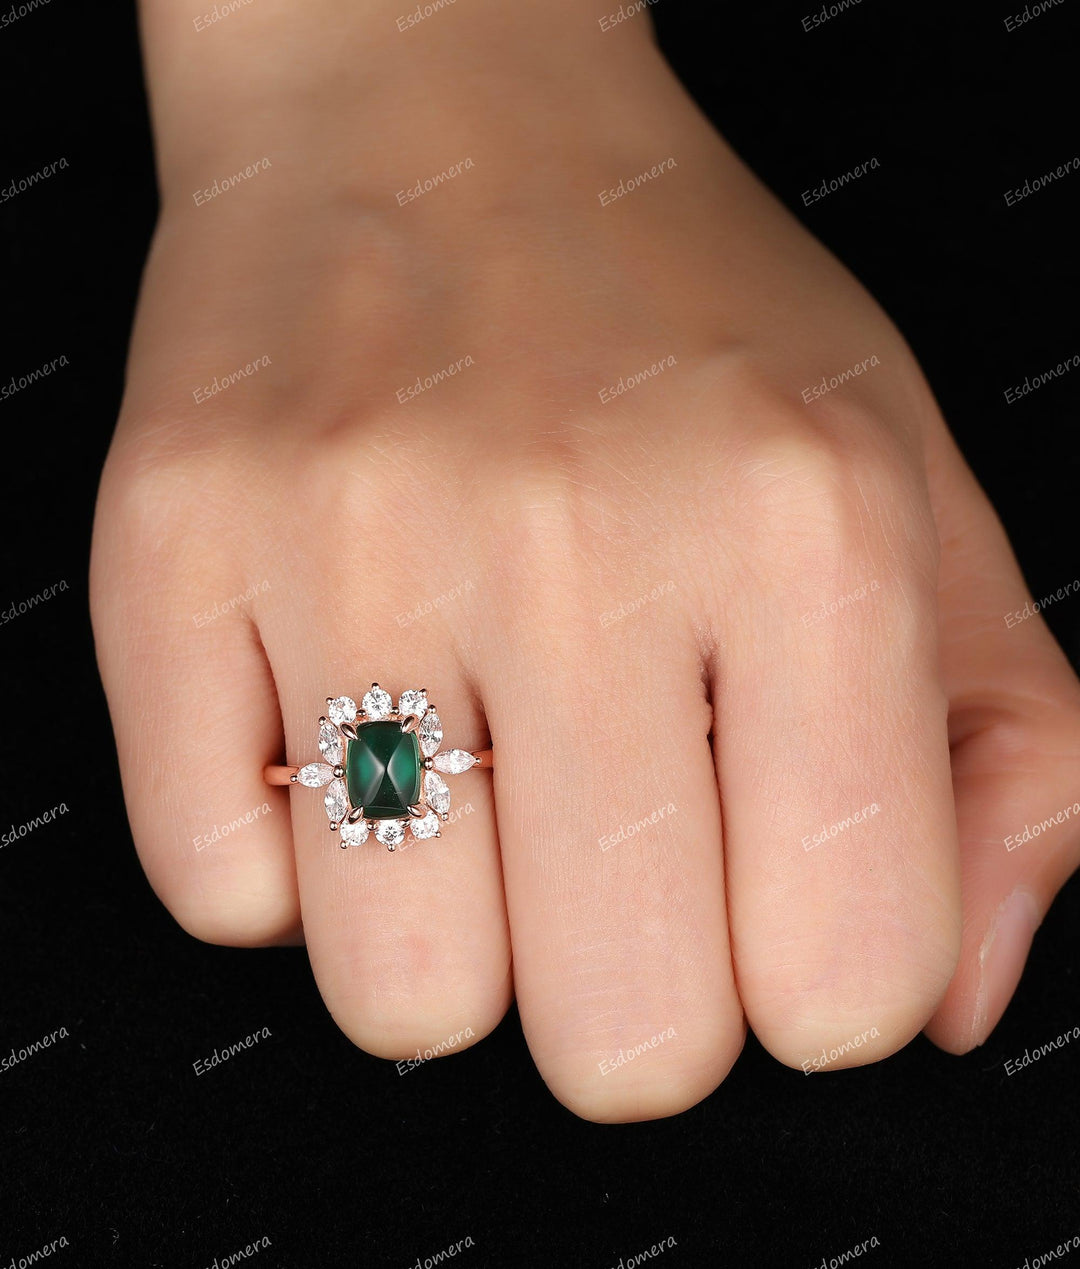 Vintage 1.80CT Long Cushion Sugar Load Cut Emerald Ring, Prong Set Ring, Moissanite Floral Halo Ring, Art Deco 14k Soild Gold Ring For Women - Esdomera